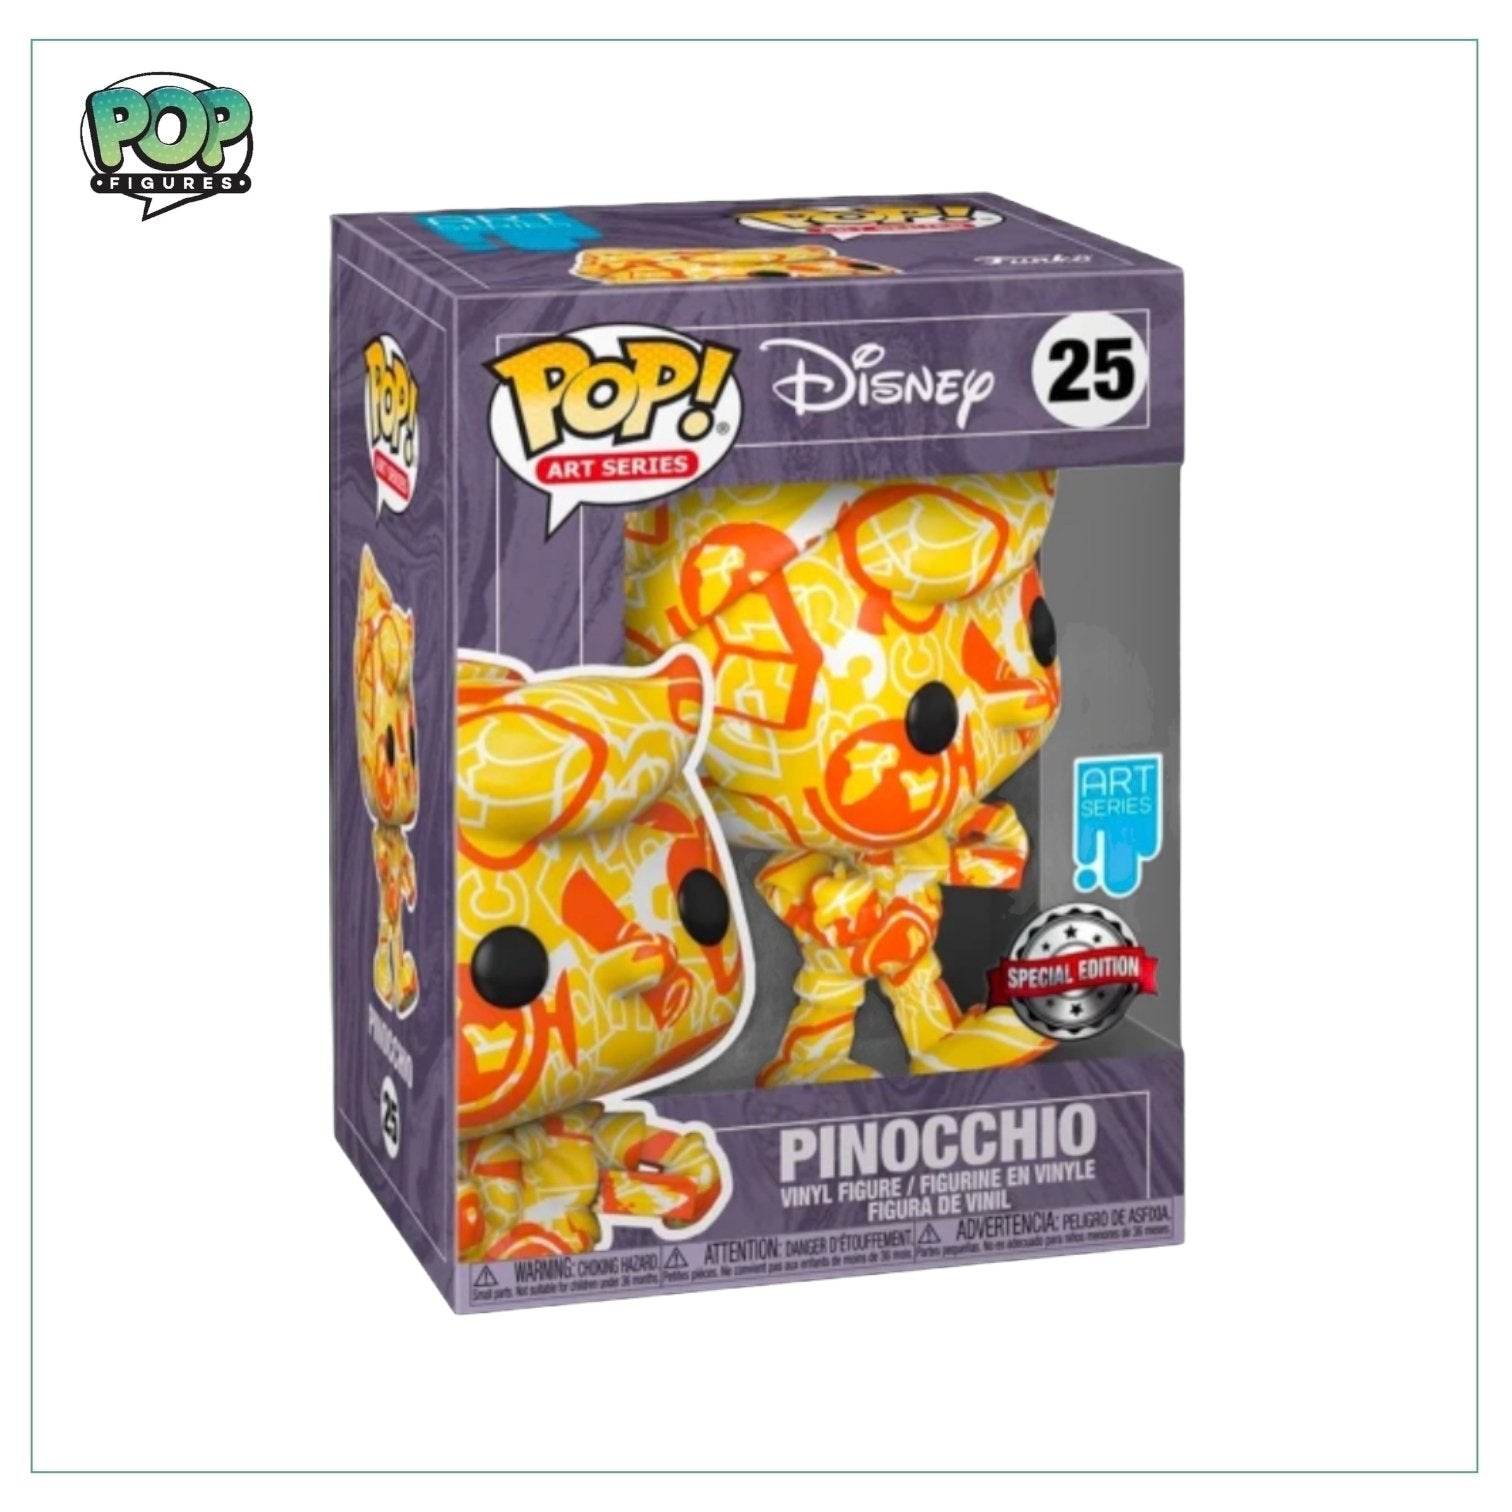 Pinocchio #25 Funko Pop! Disney Art Series - Pop Figures | Funko | Pop Funko | Funko Pop